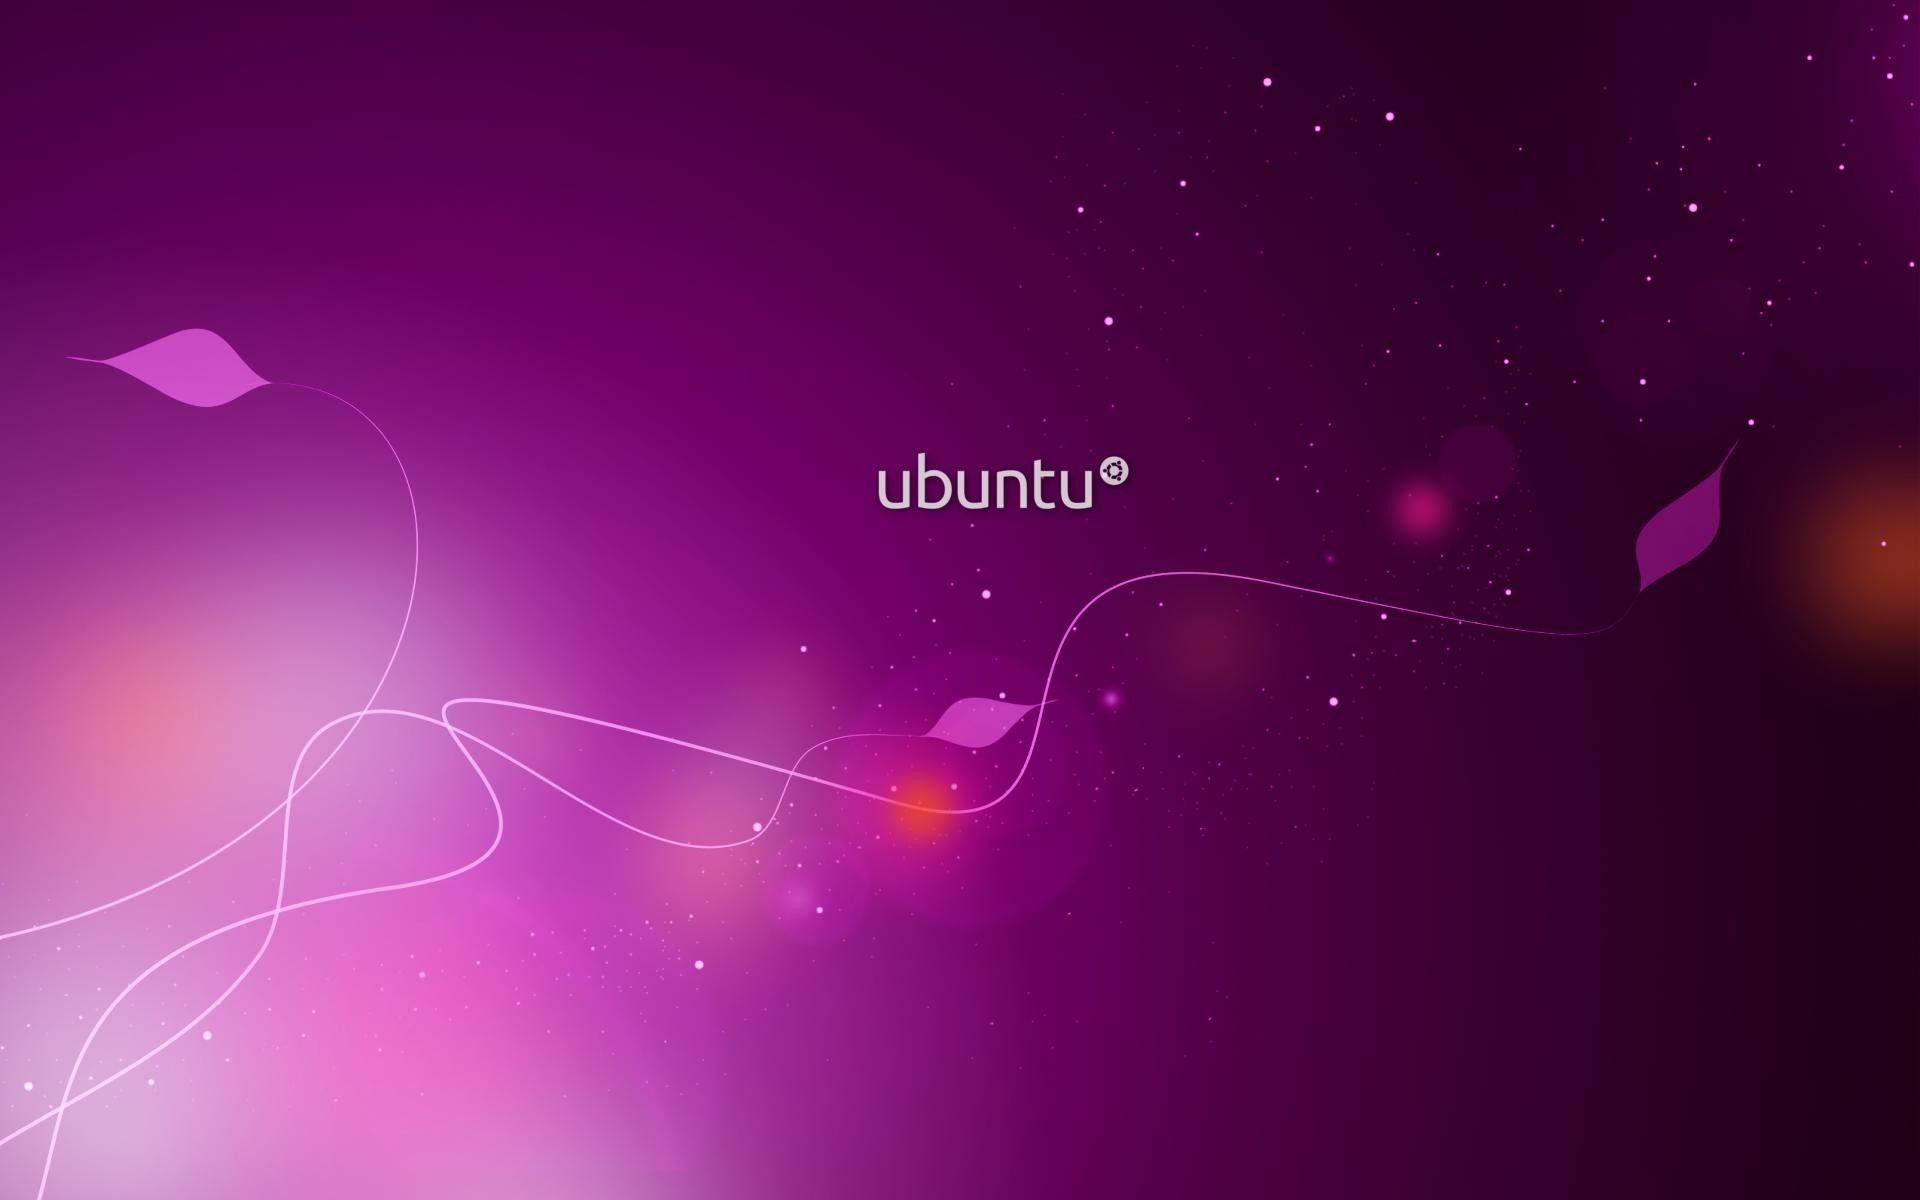 Ubuntu 1920X1200 Wallpaper and Background Image